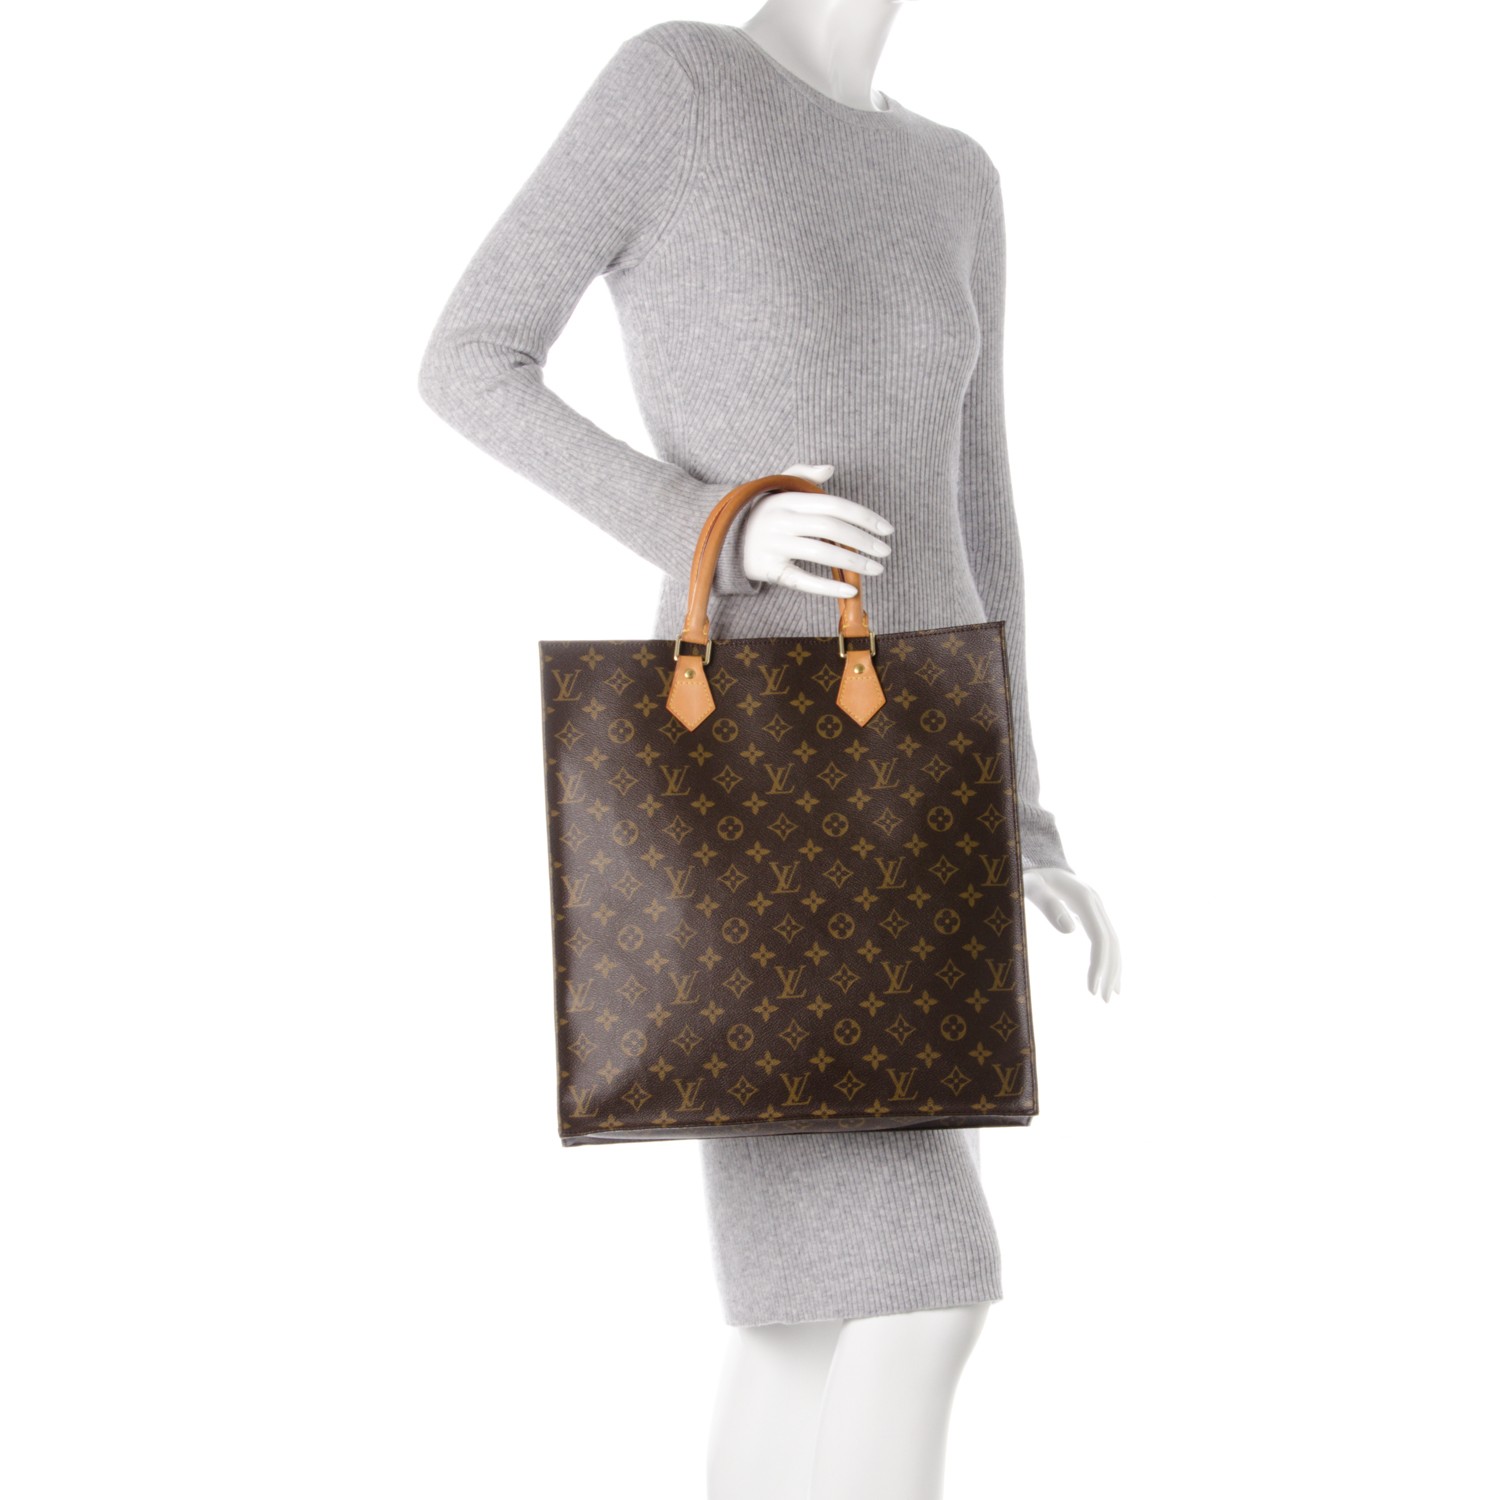 Louis Vuitton Sac Plat Monogram-embossed Leather Tote Bag in White